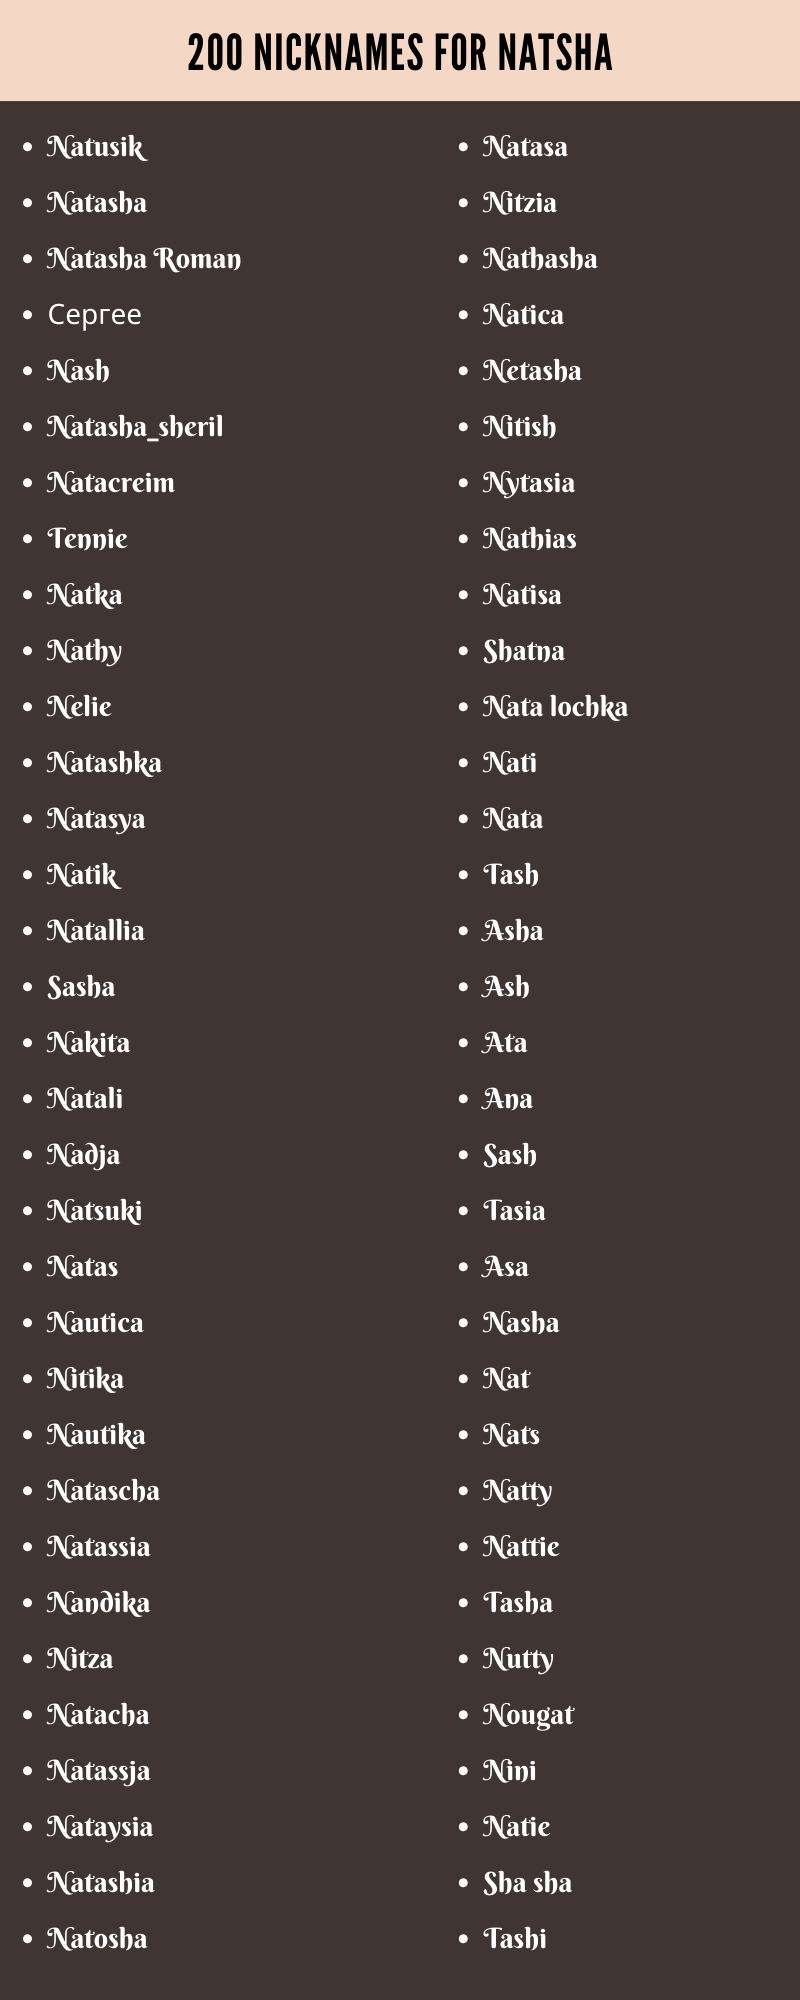  nicknames for natsha